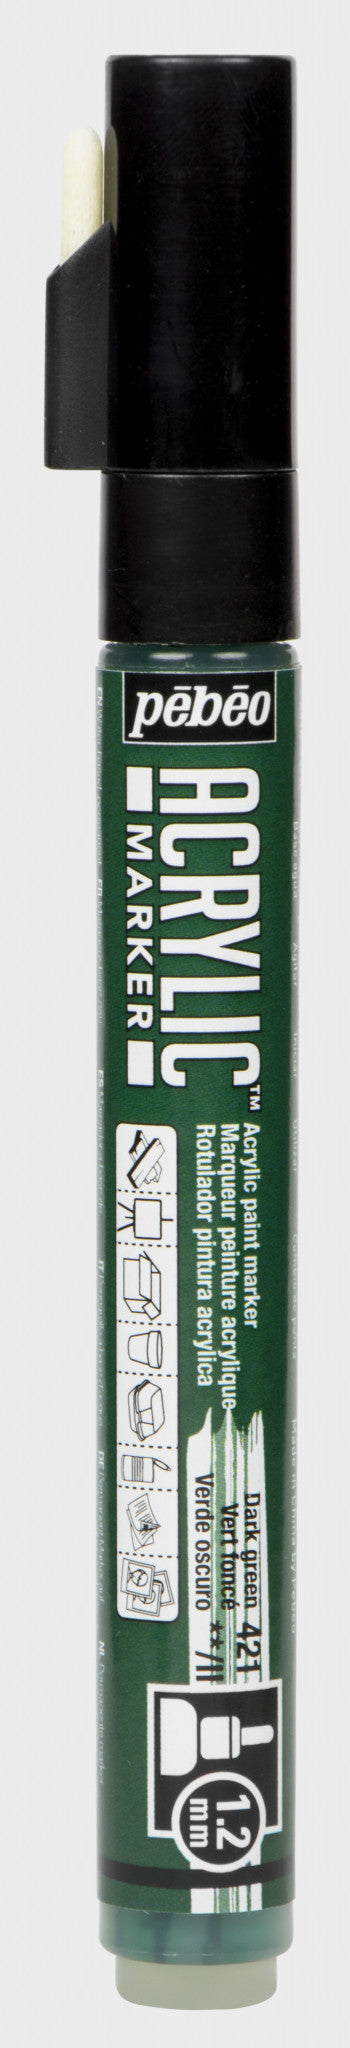 Acrylic Marker 1.2mm Pebeo Dark green